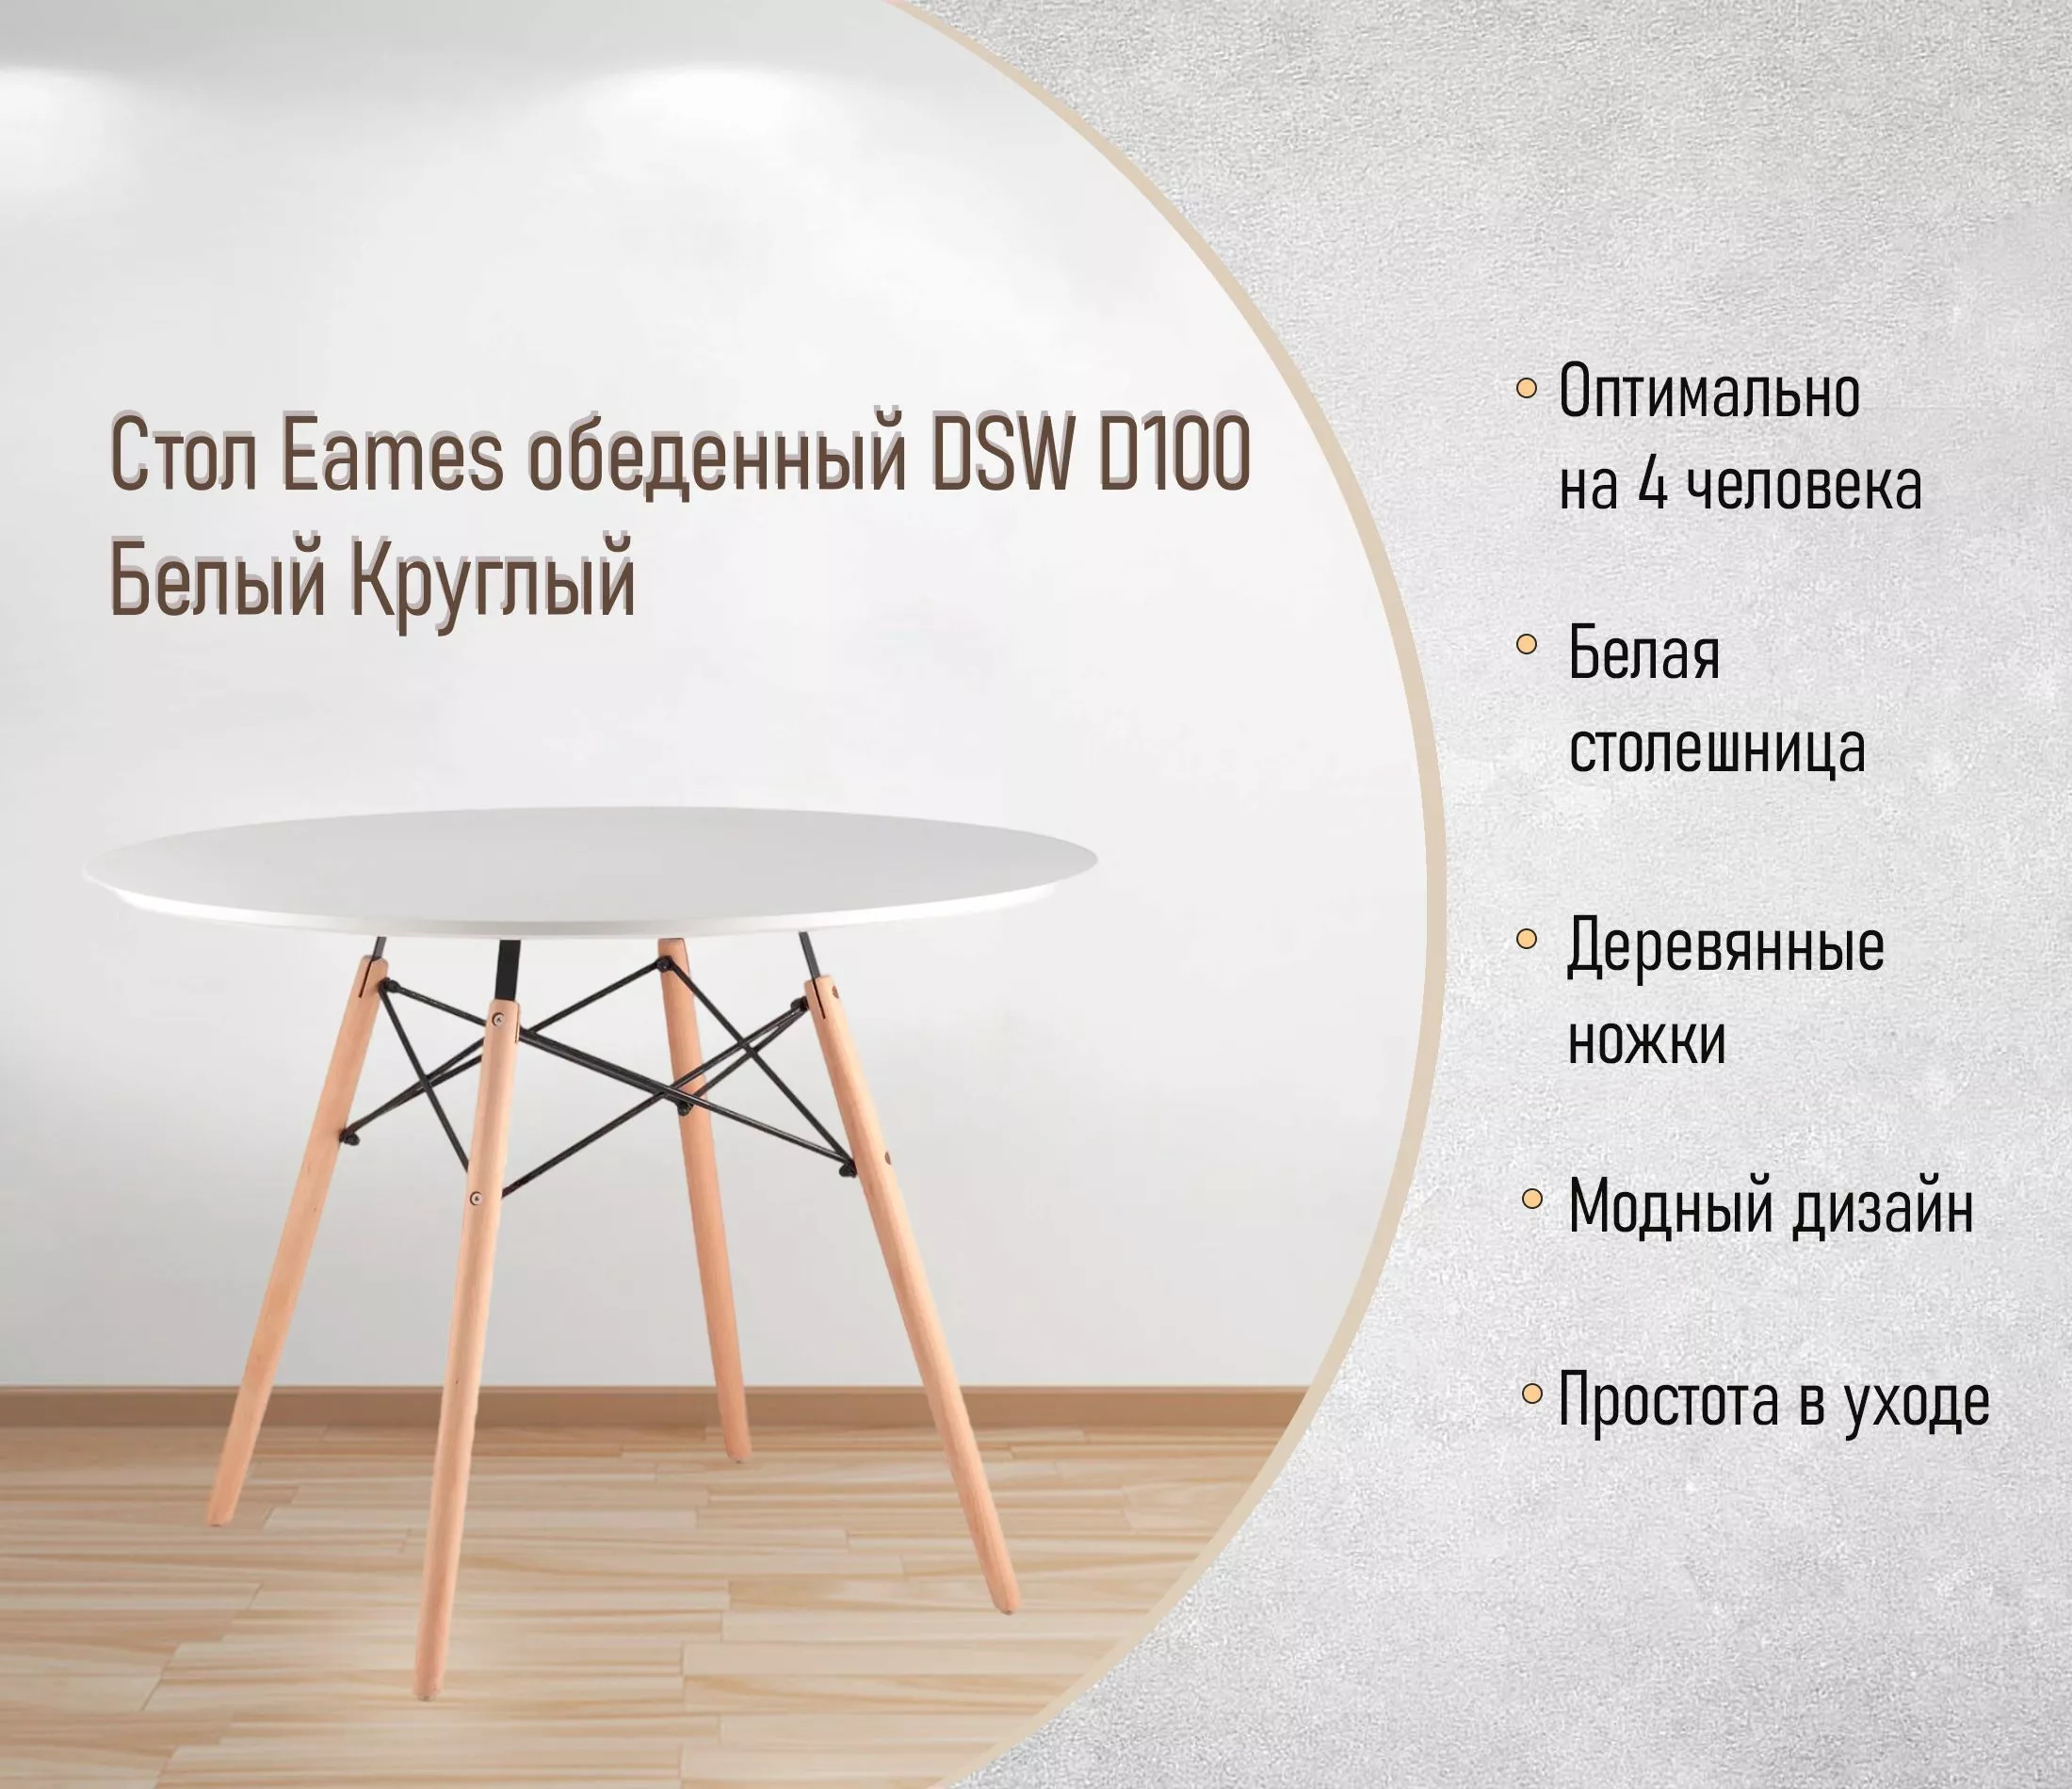 Стол Eames обеденный DSW D100 Белый Круглый